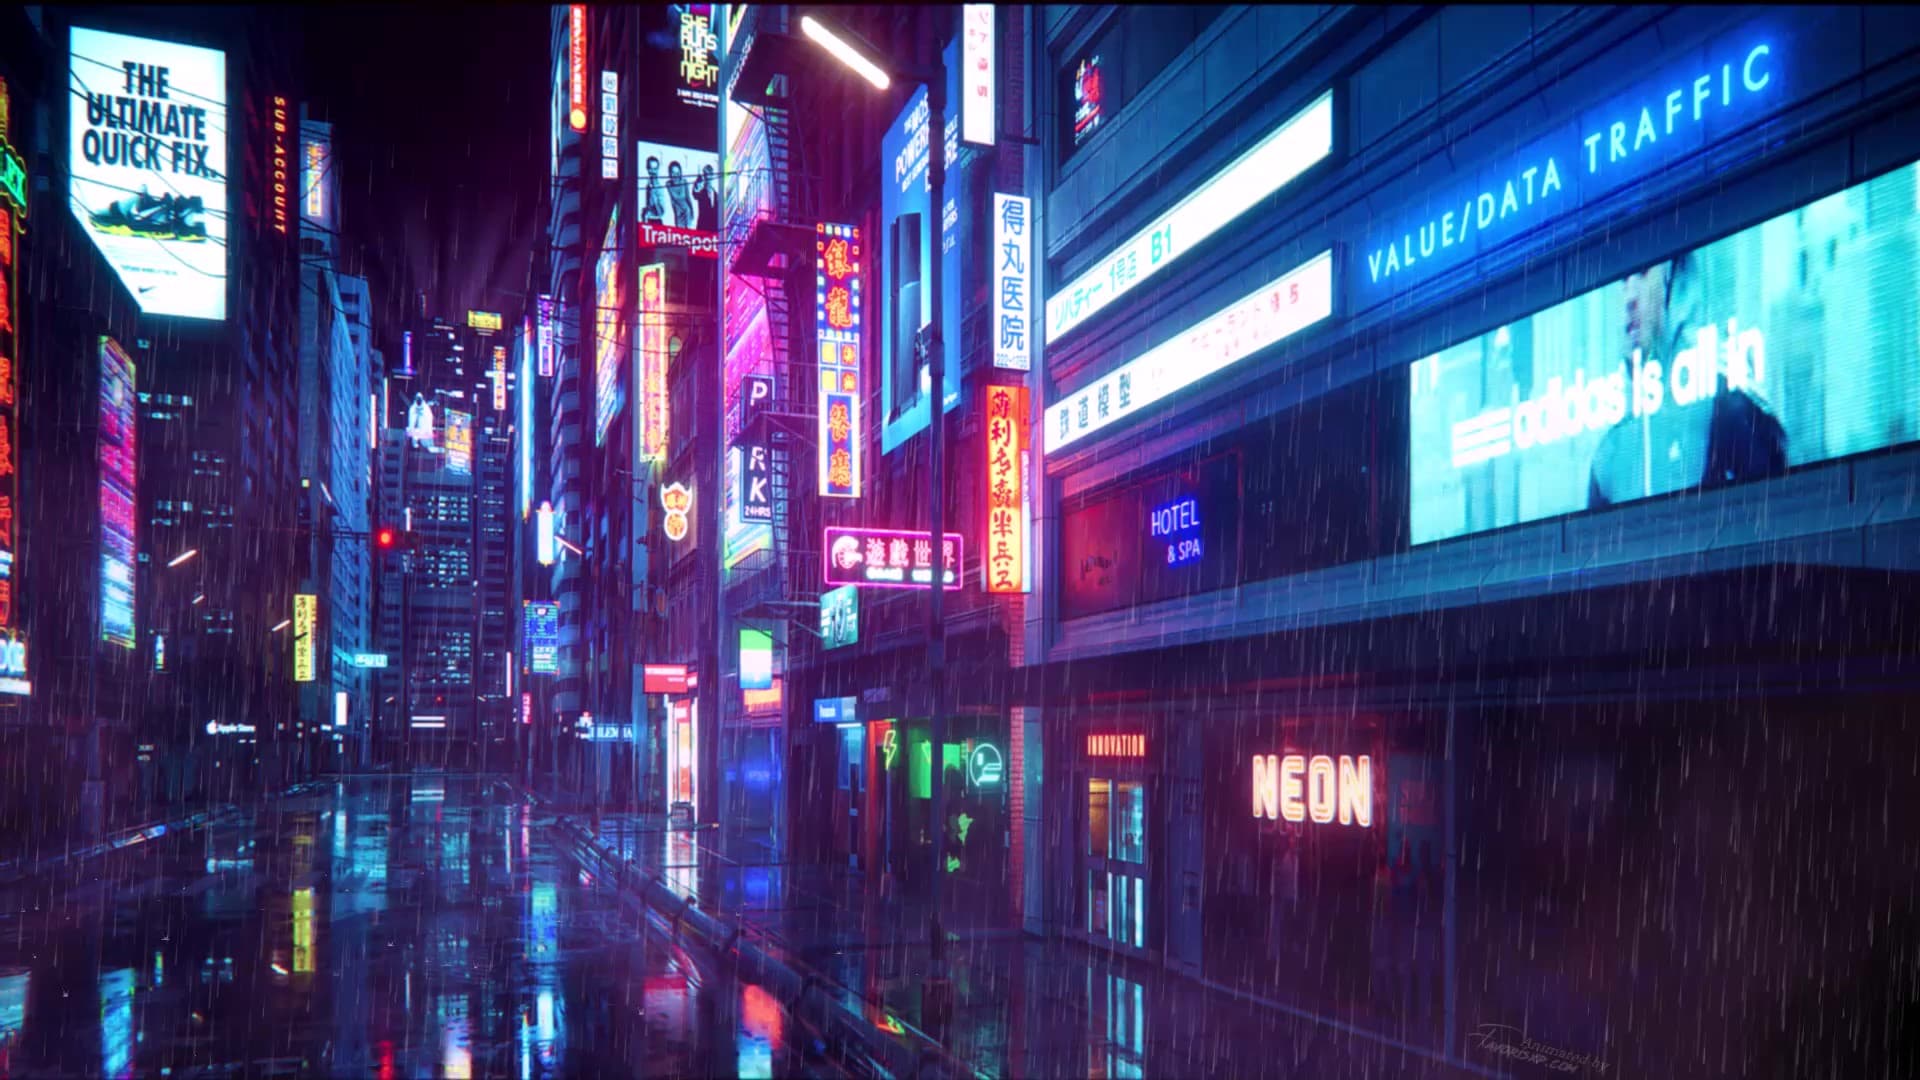 Neon Light City Live Wallpaper | by Favorisxp on DeviantArt